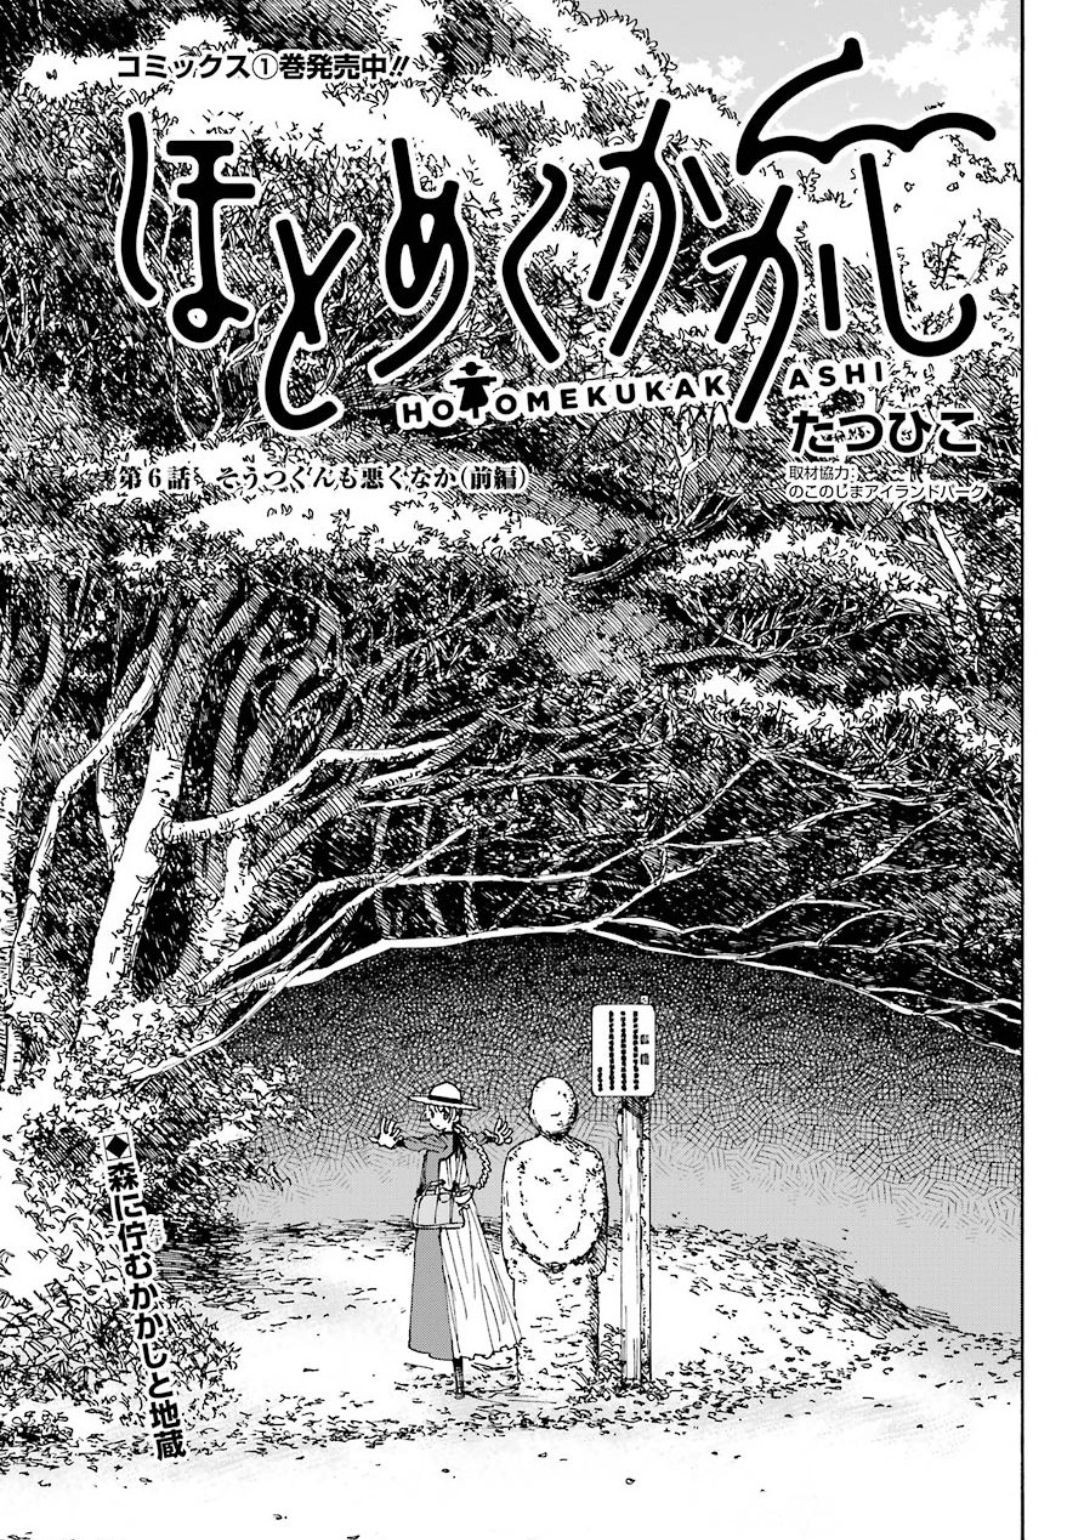 Hotomeku-kakashi - Chapter 06-1 - Page 1